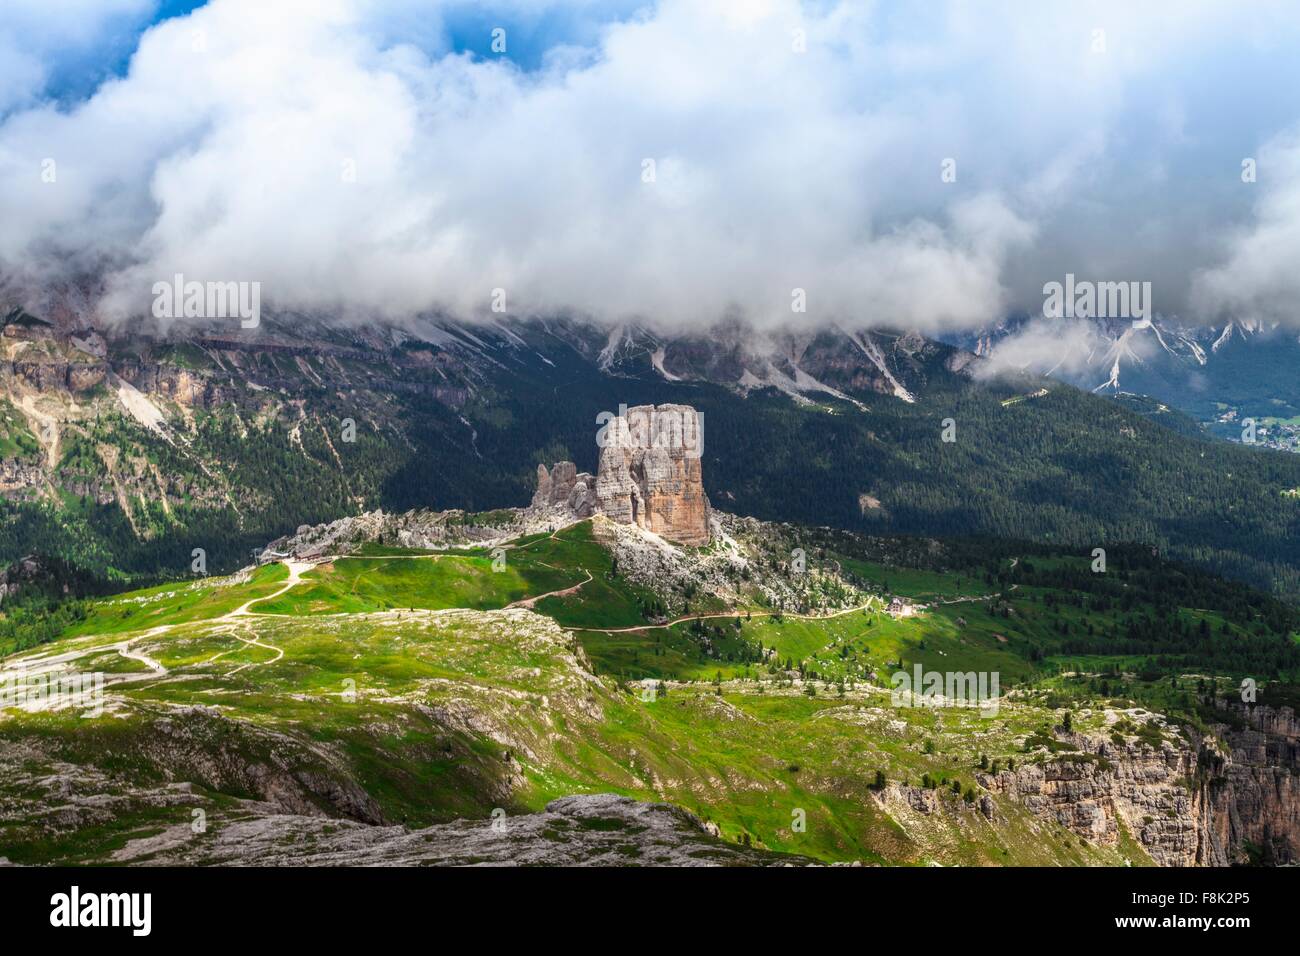 Felsformation und niedrige Wolken, Dolomiten, Italien Stockfoto